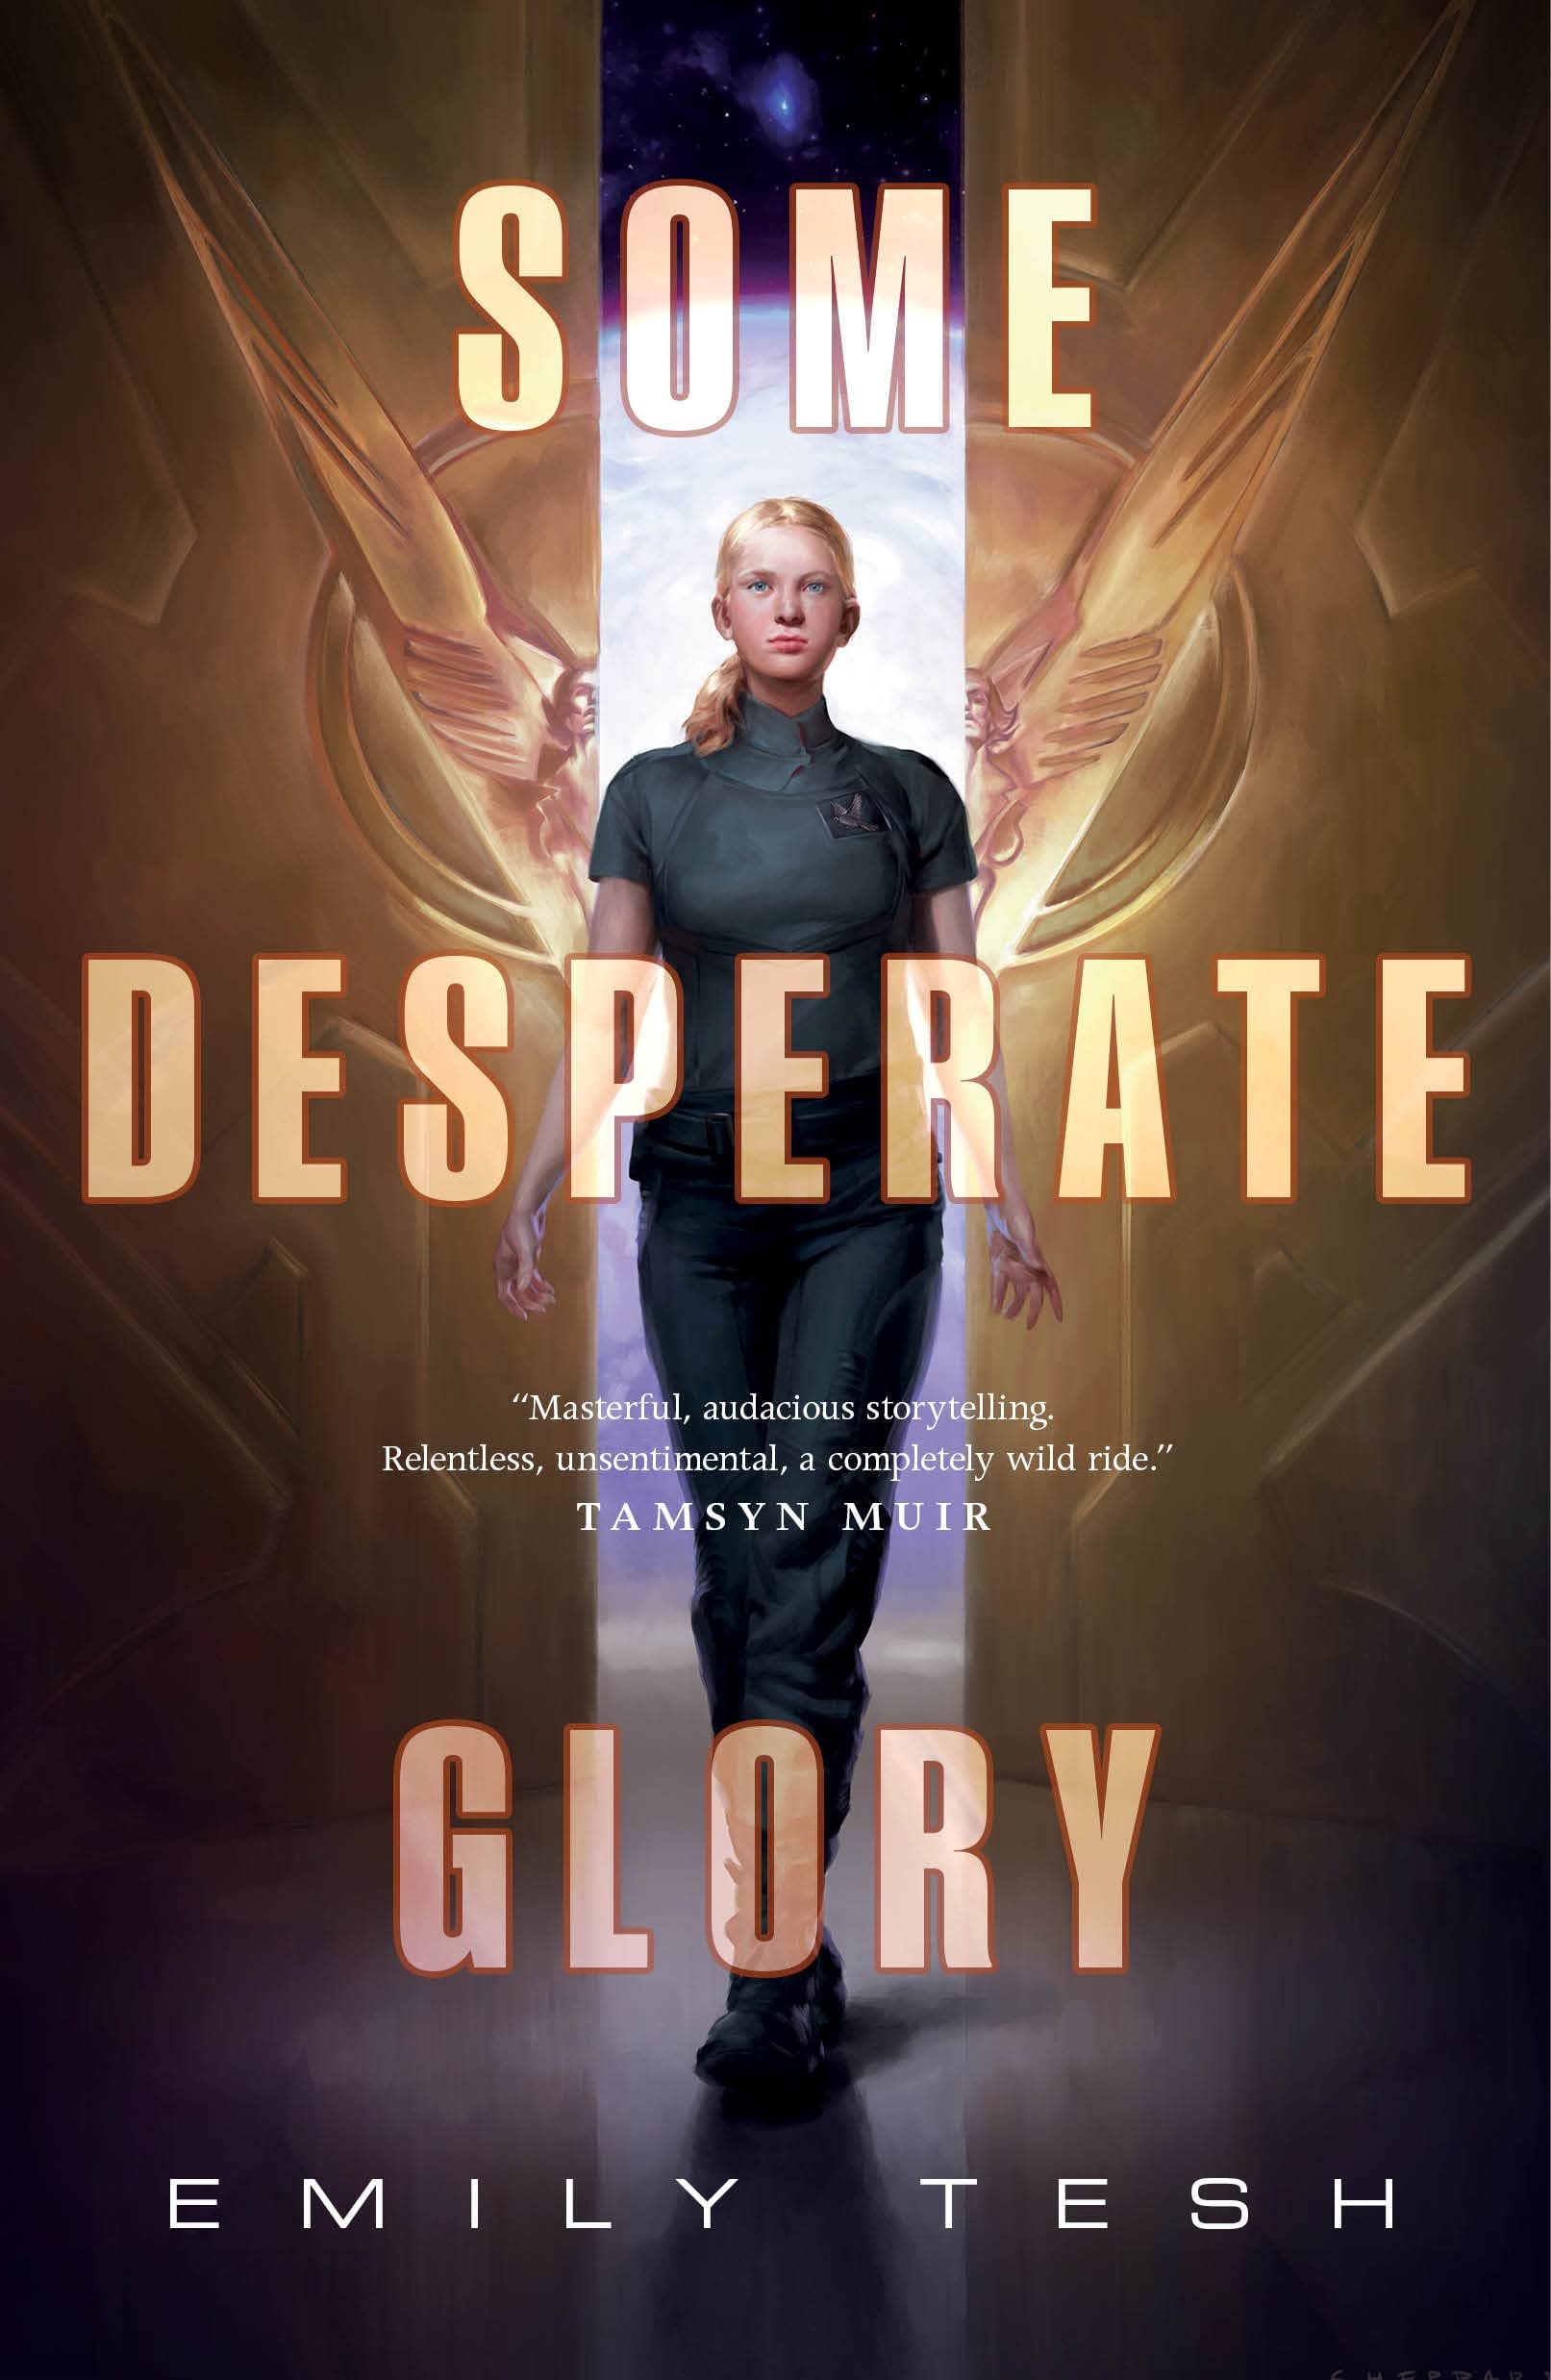 Emily Tesh: Some Desperate Glory (2023, Doherty Associates, LLC, Tom)